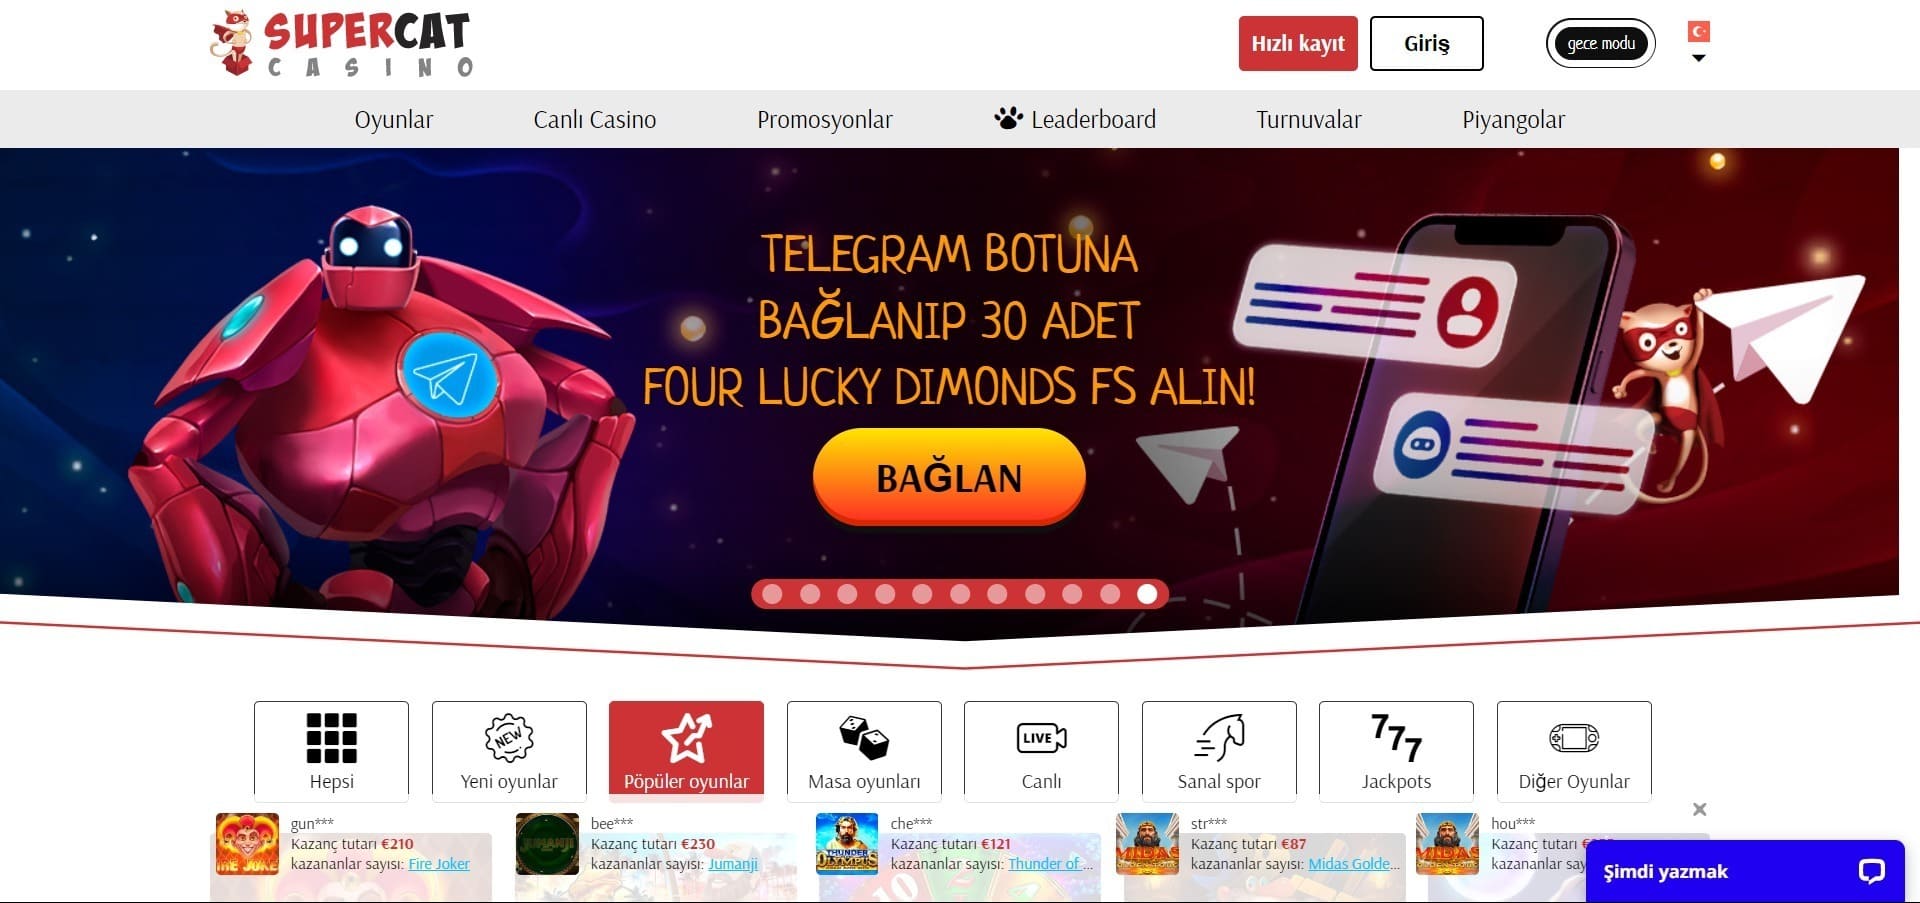 Super Cat Casino'nun resmi web sitesi